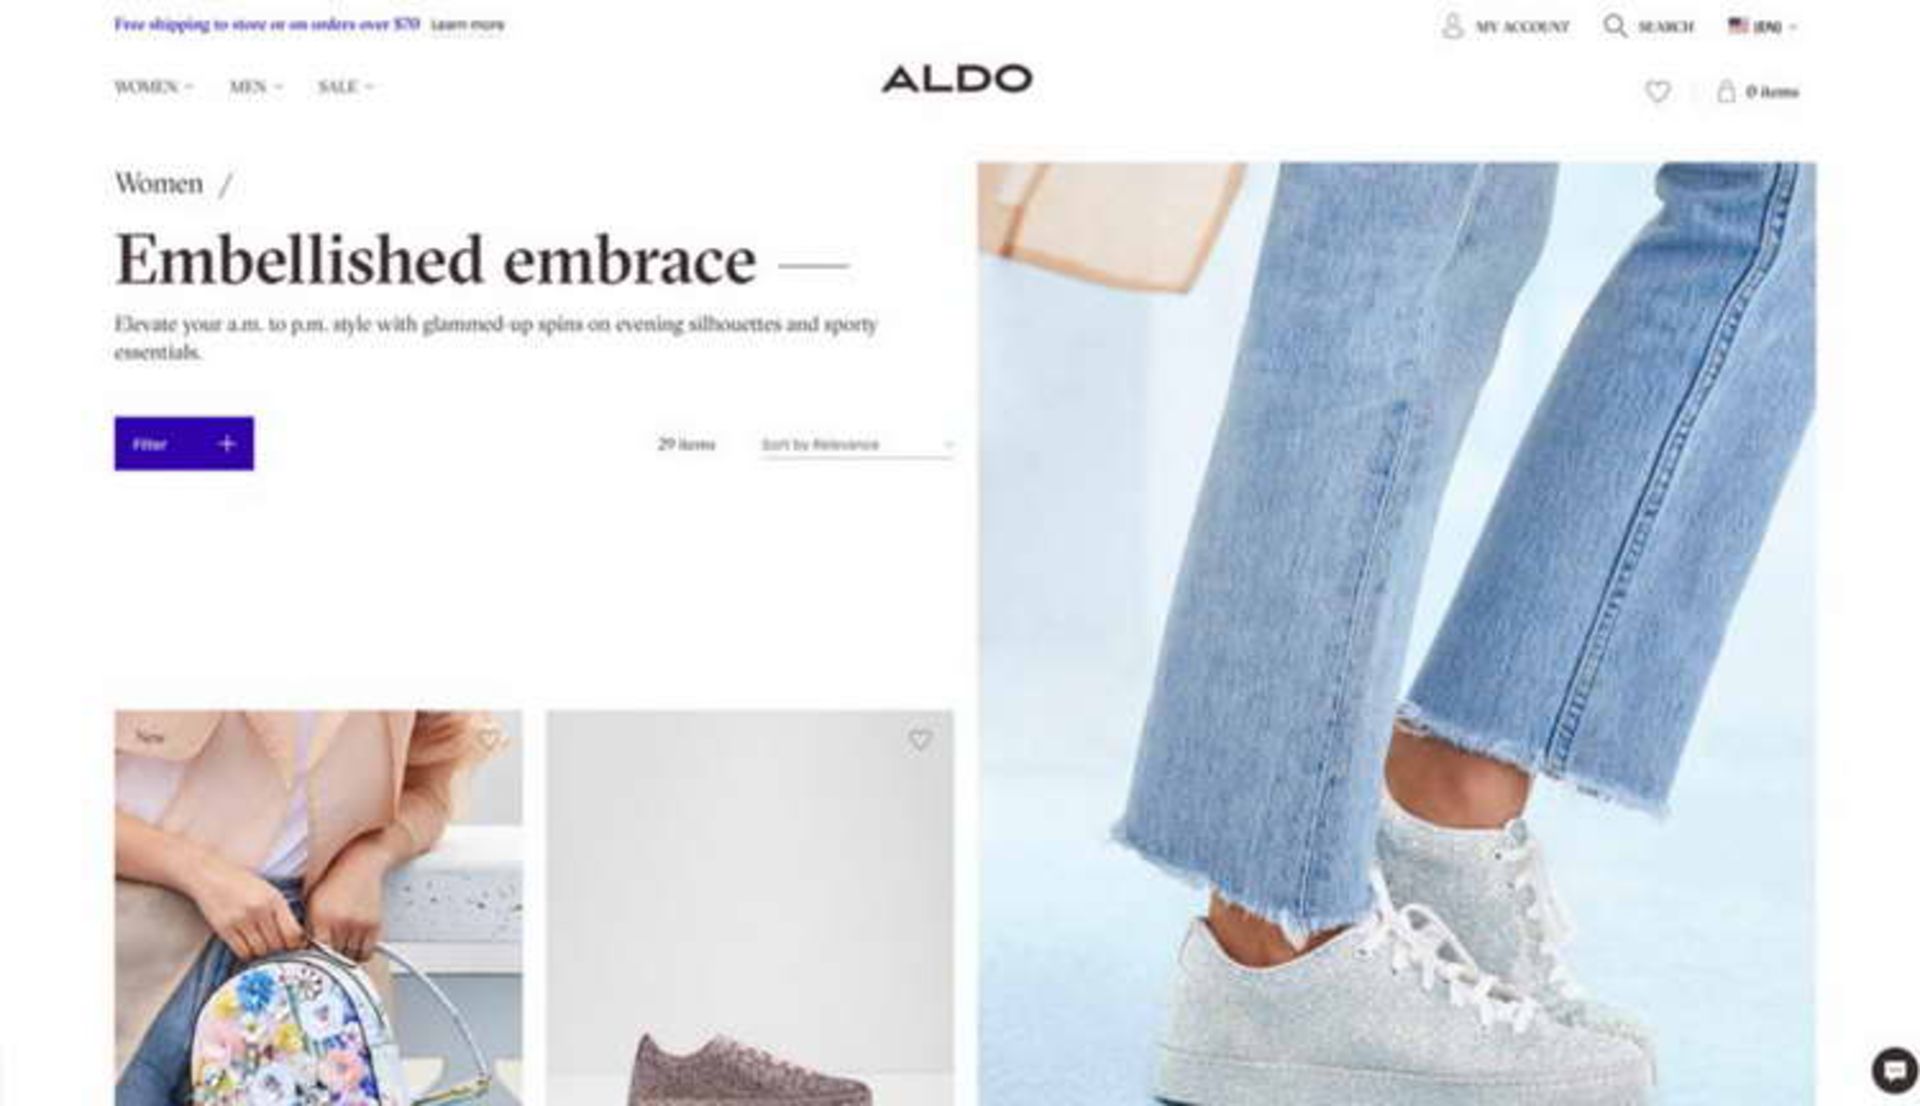 Aldo Shoes alt-tex of images and ARIA labels